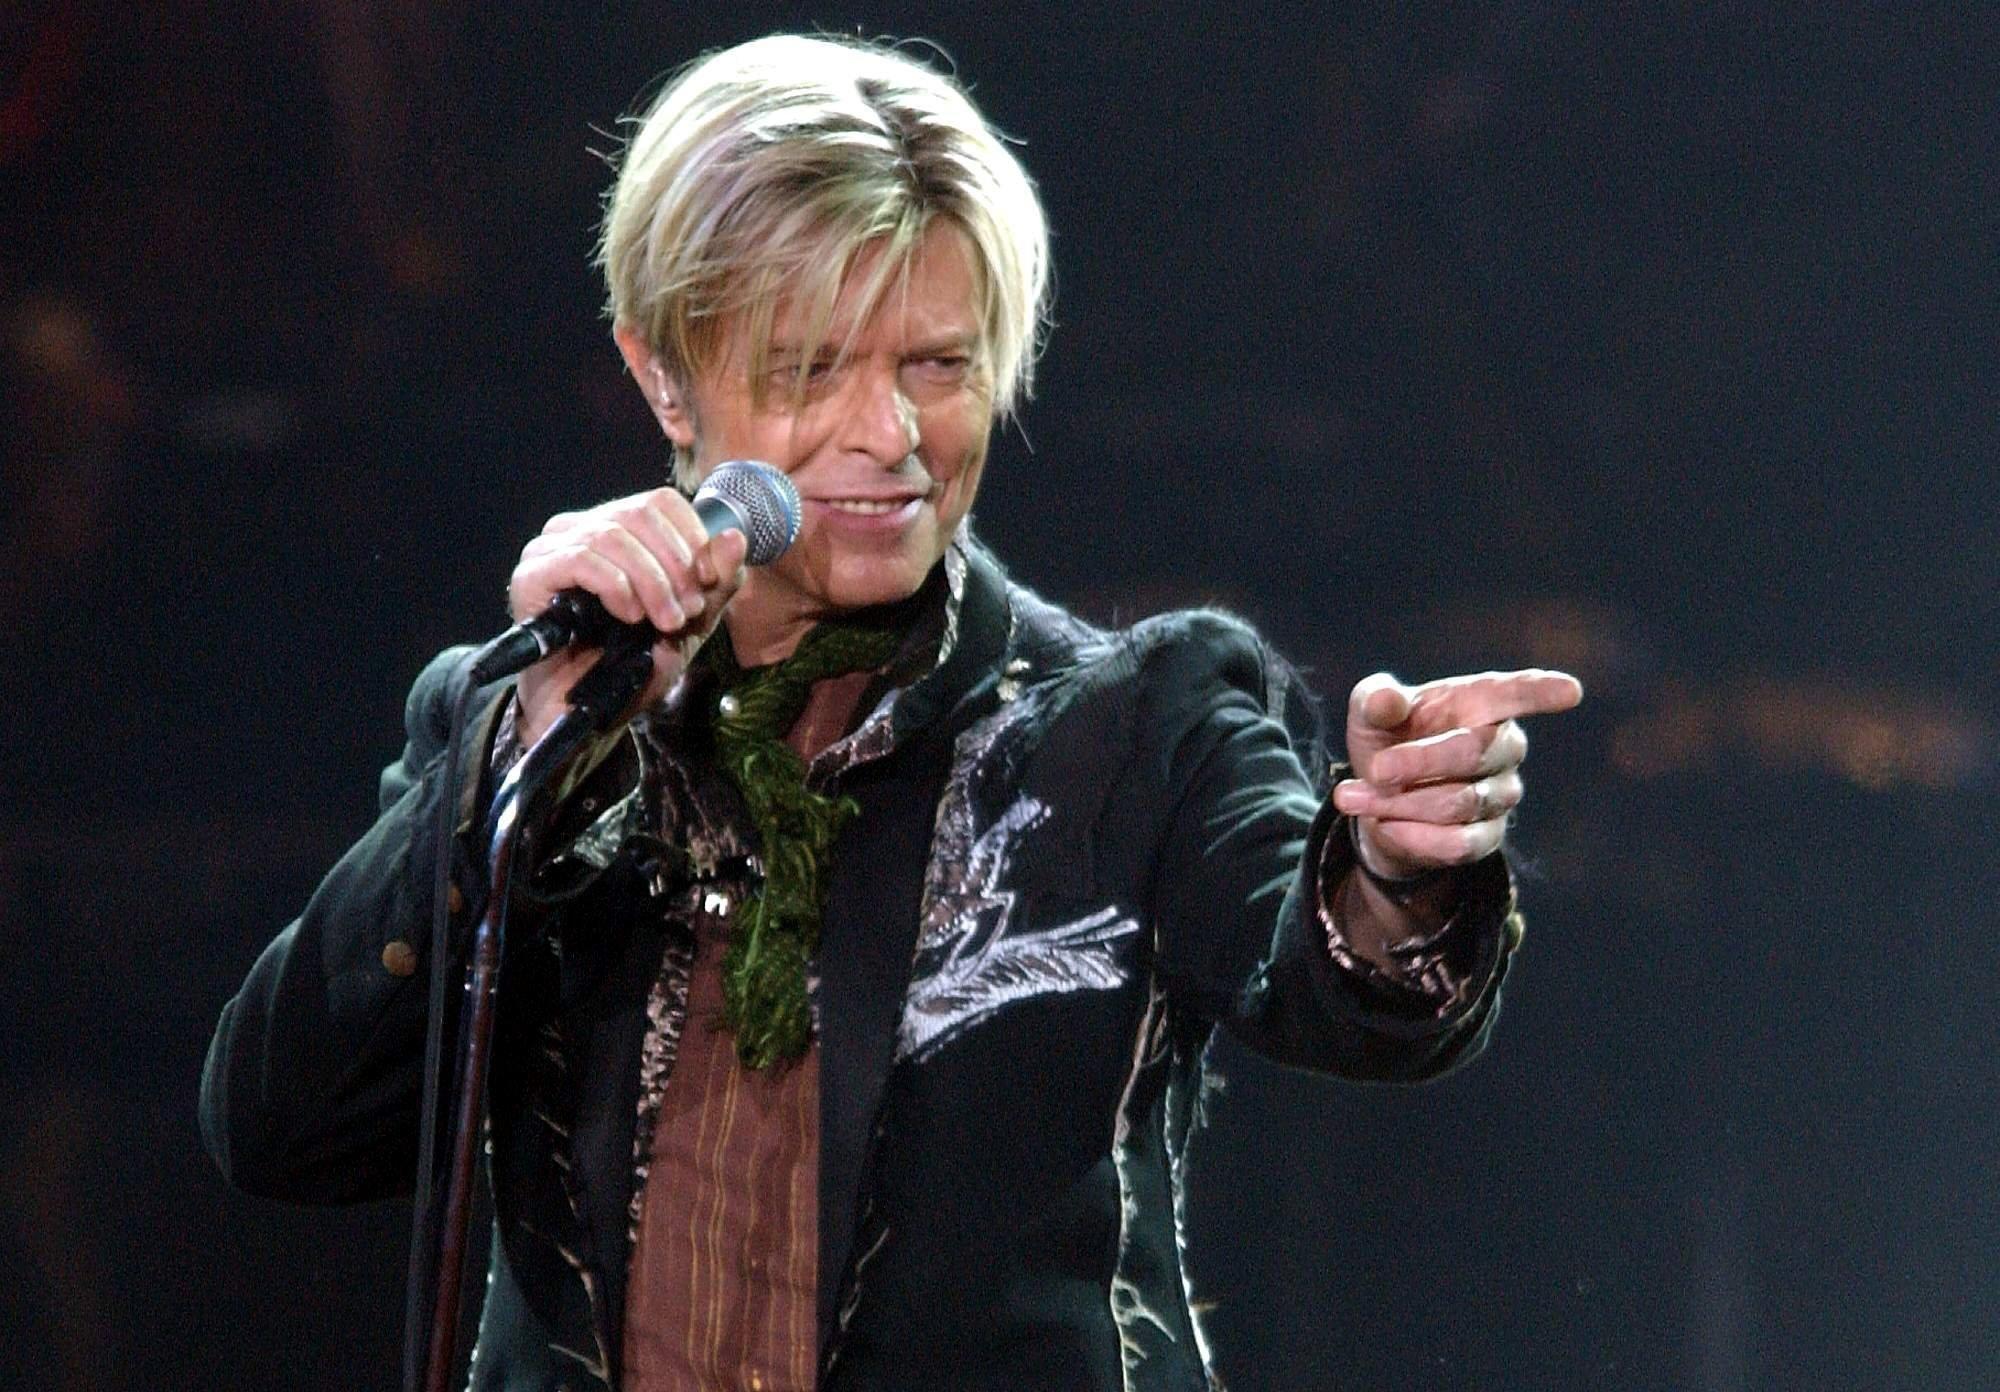 L'artiste britannique David Bowie sur scène à Hambourg, le 16 octobre 2003. [MAURIZIO GAMBARINI / DPA]